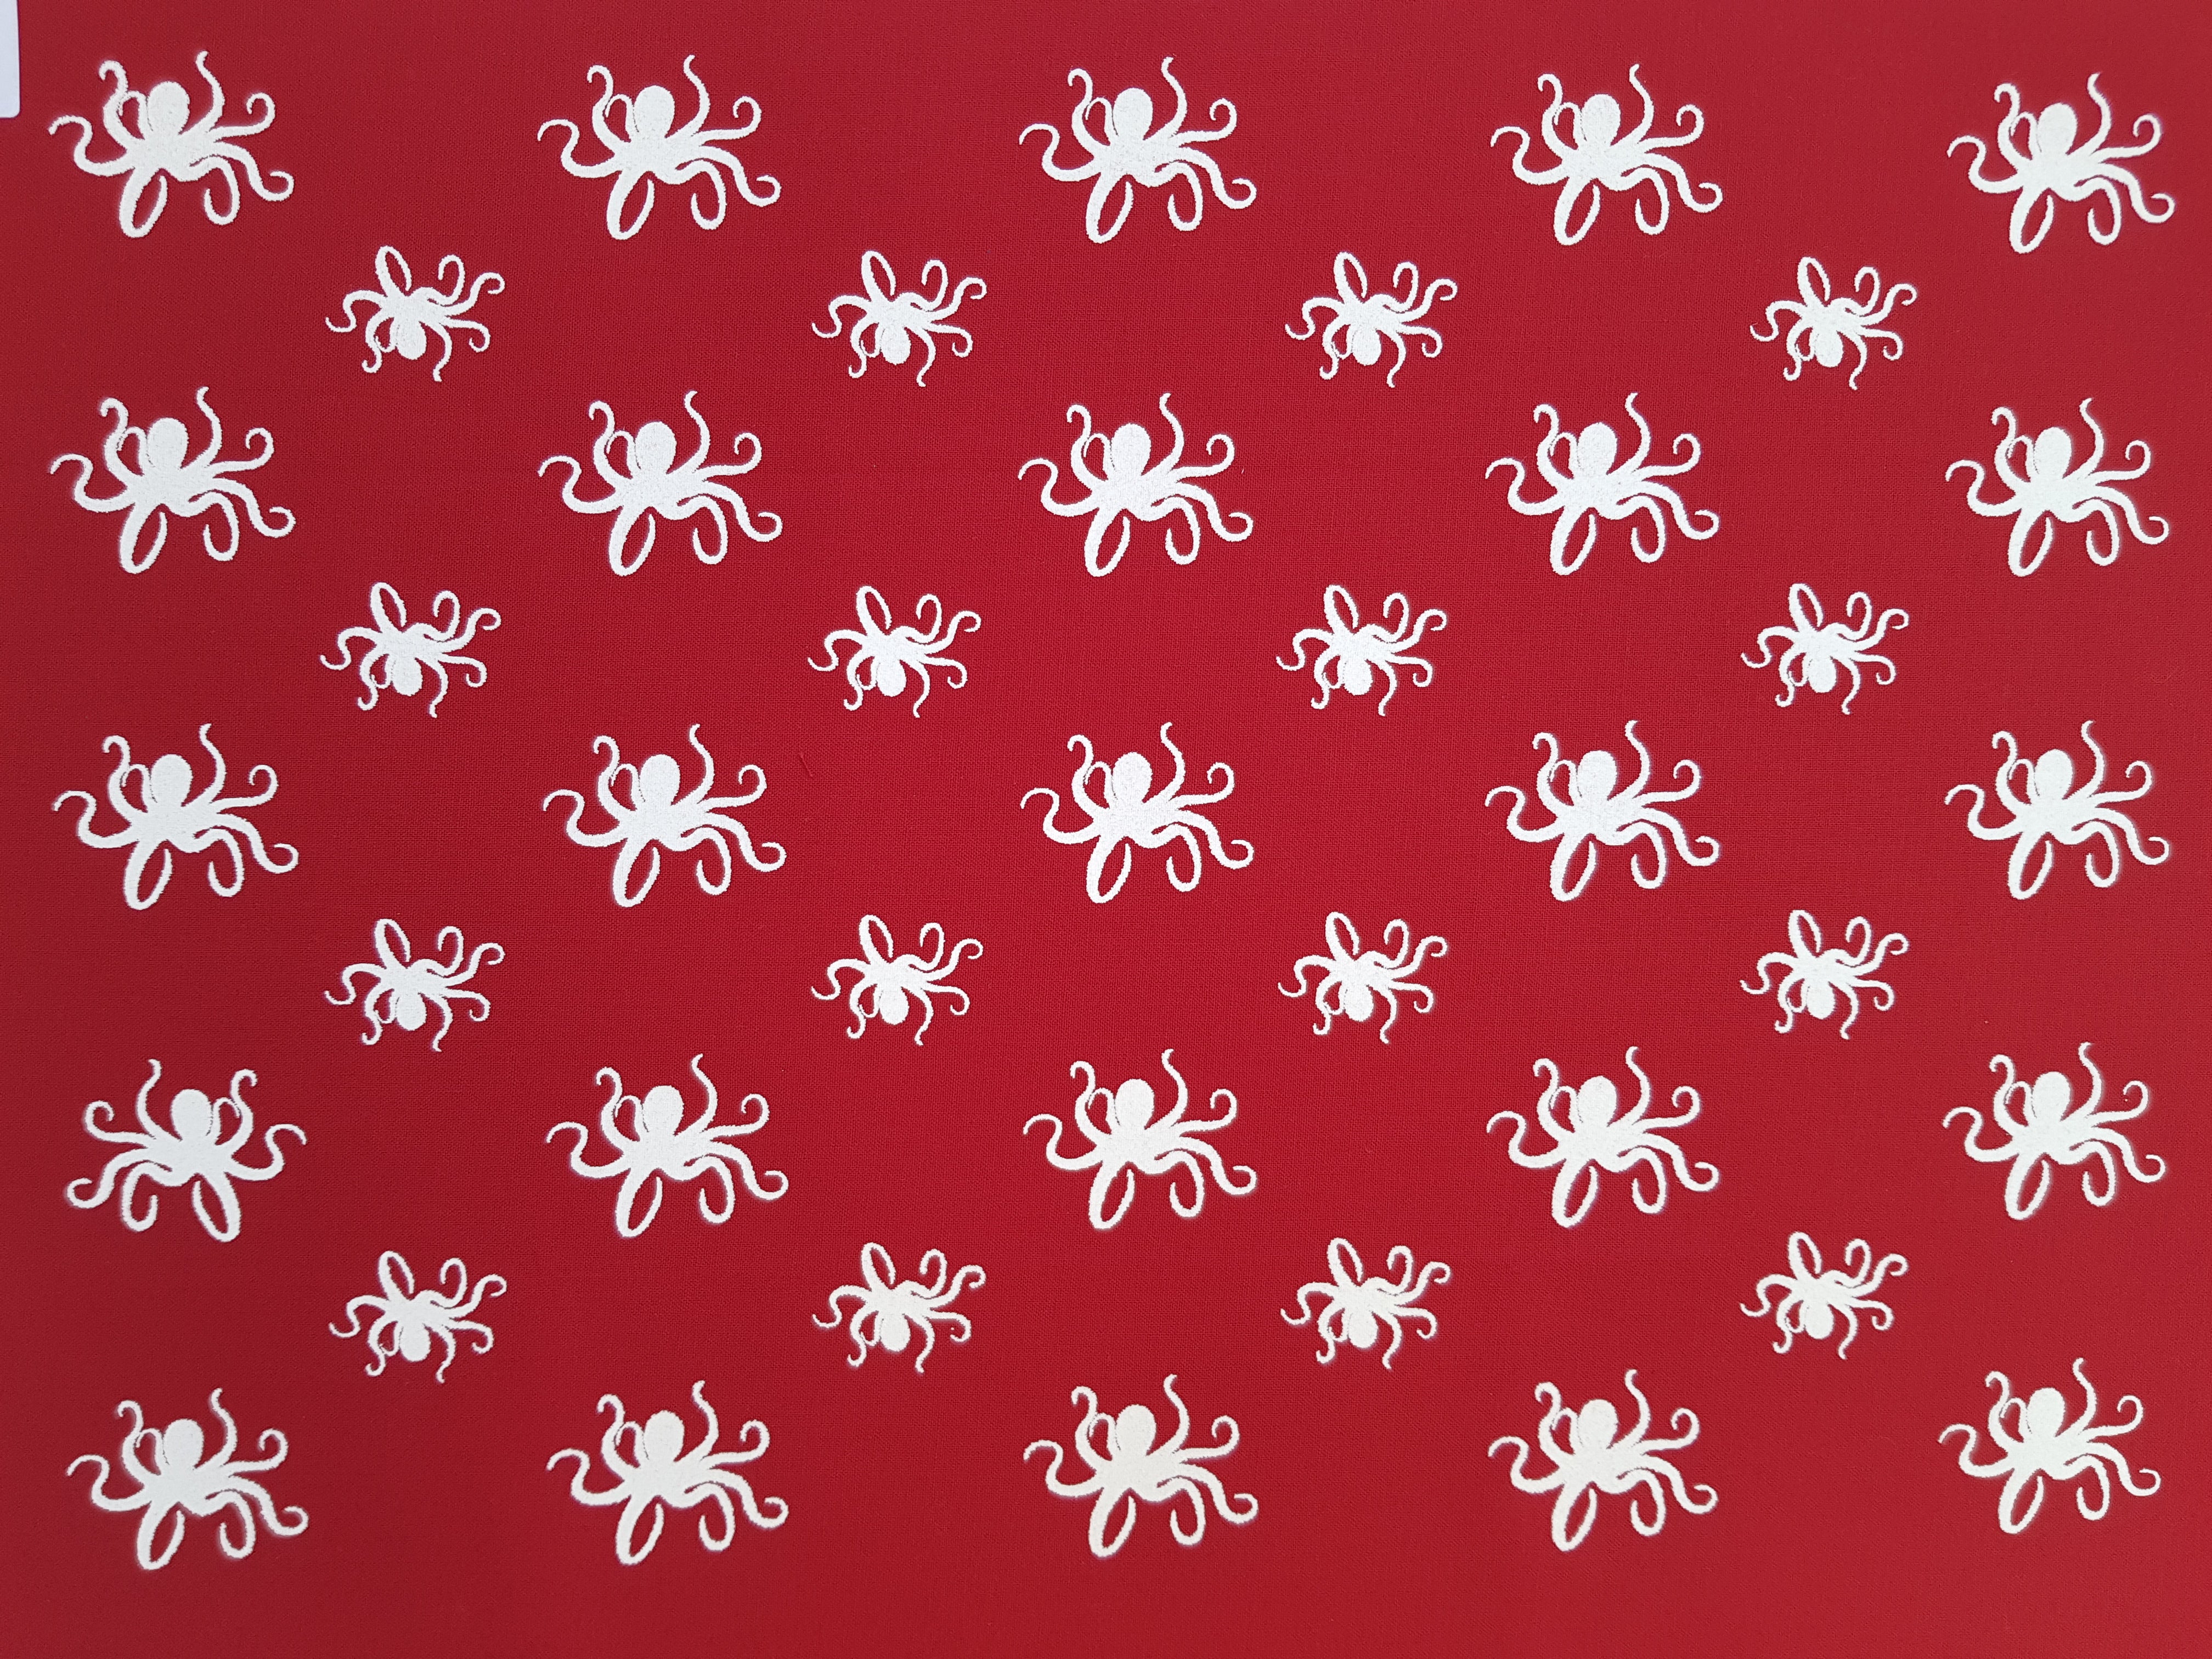 OCTOPUS - Screen Printed Octopus Fabric on Kona Cotton - Octopuses - Panels